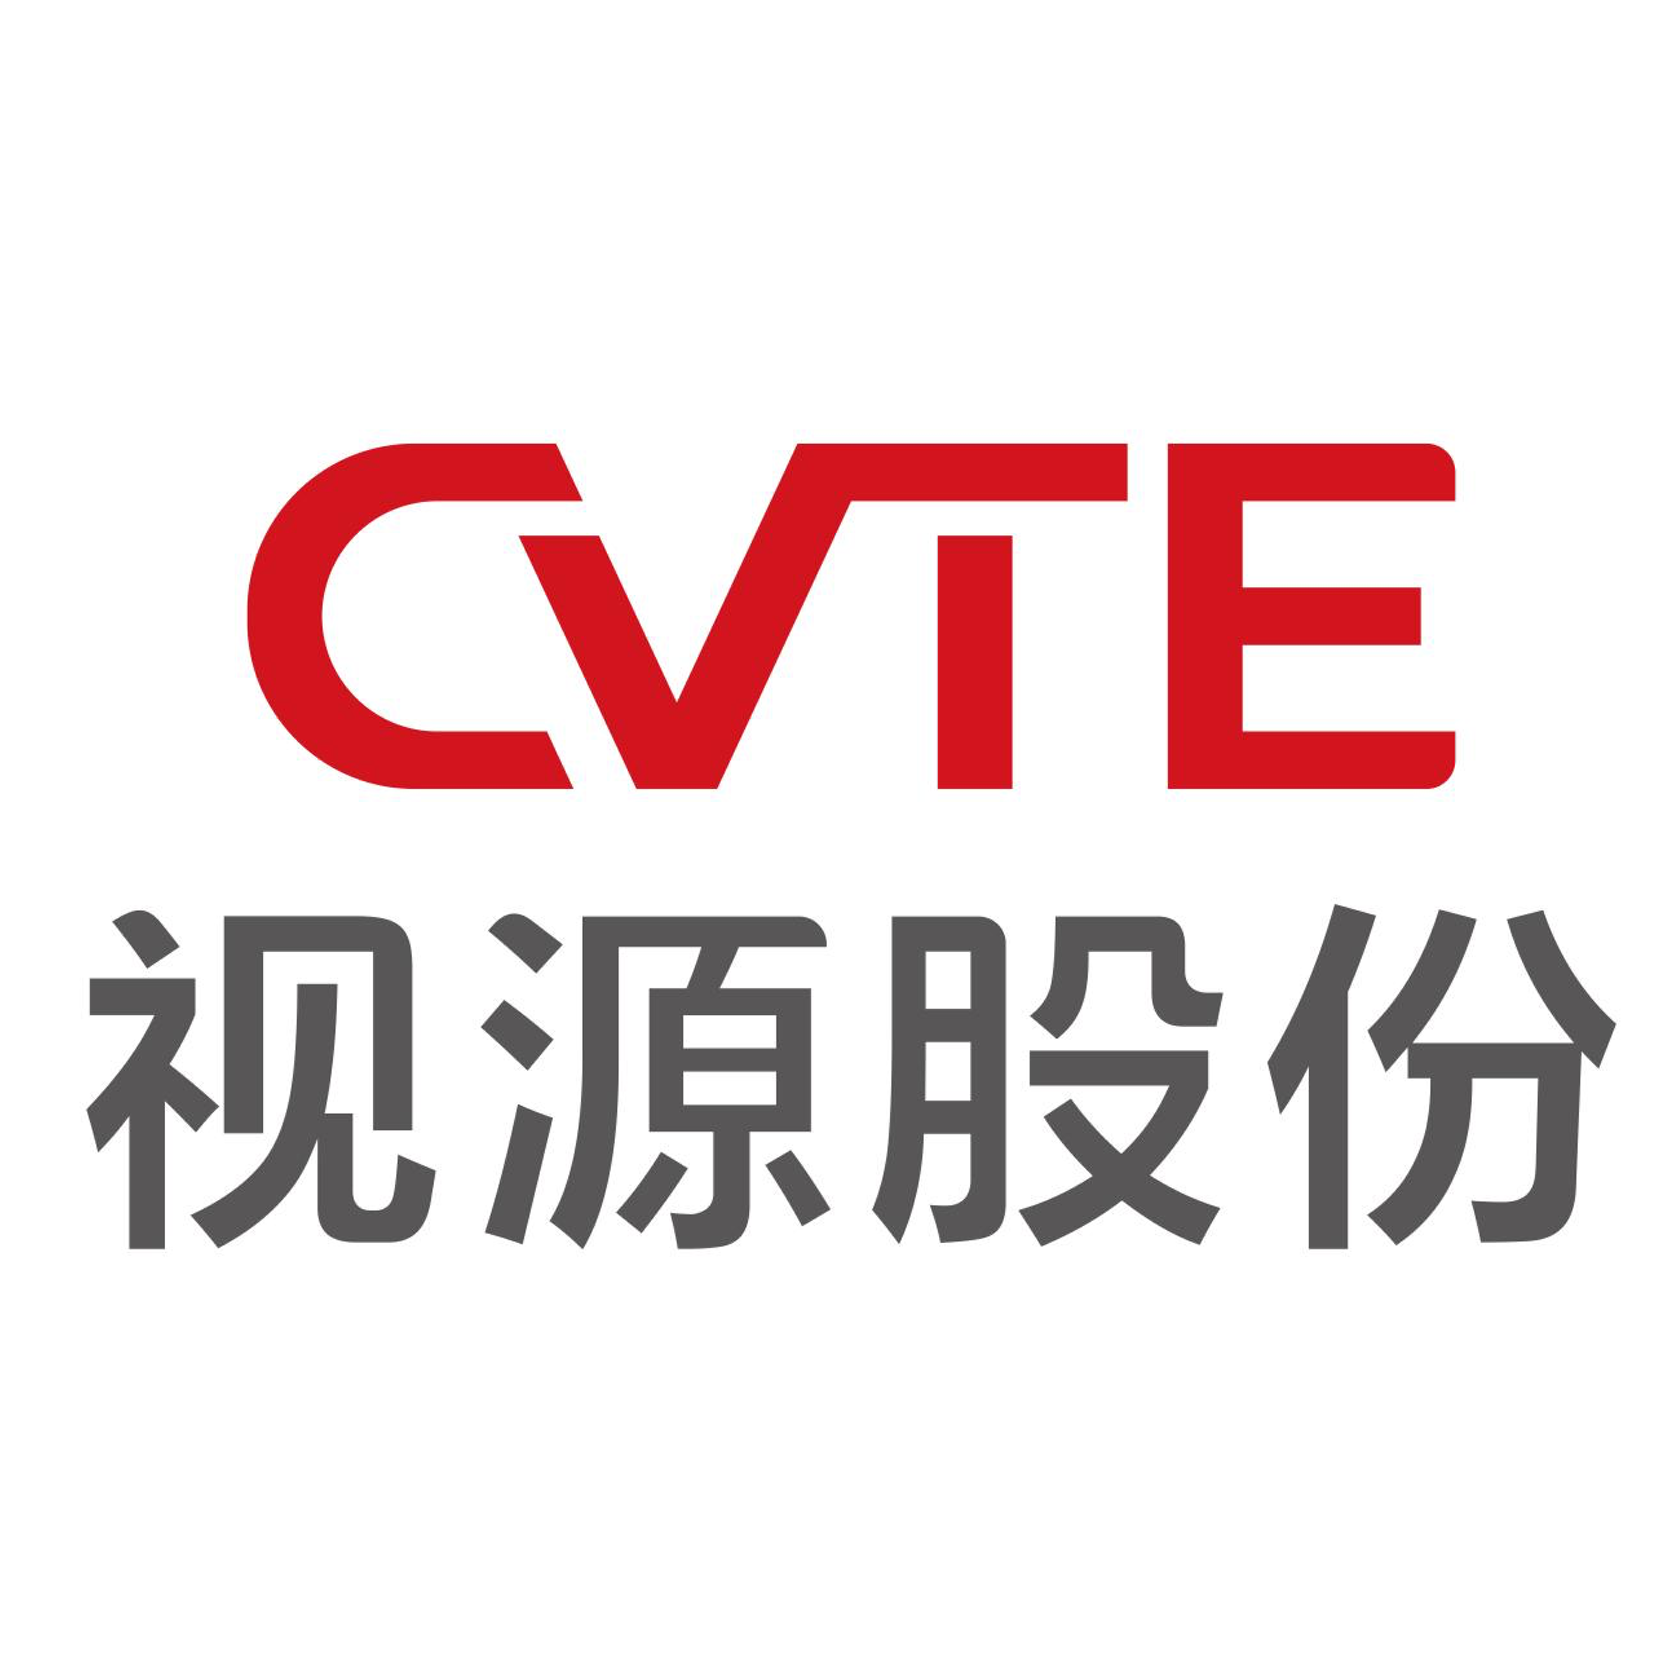 CVTE Logo